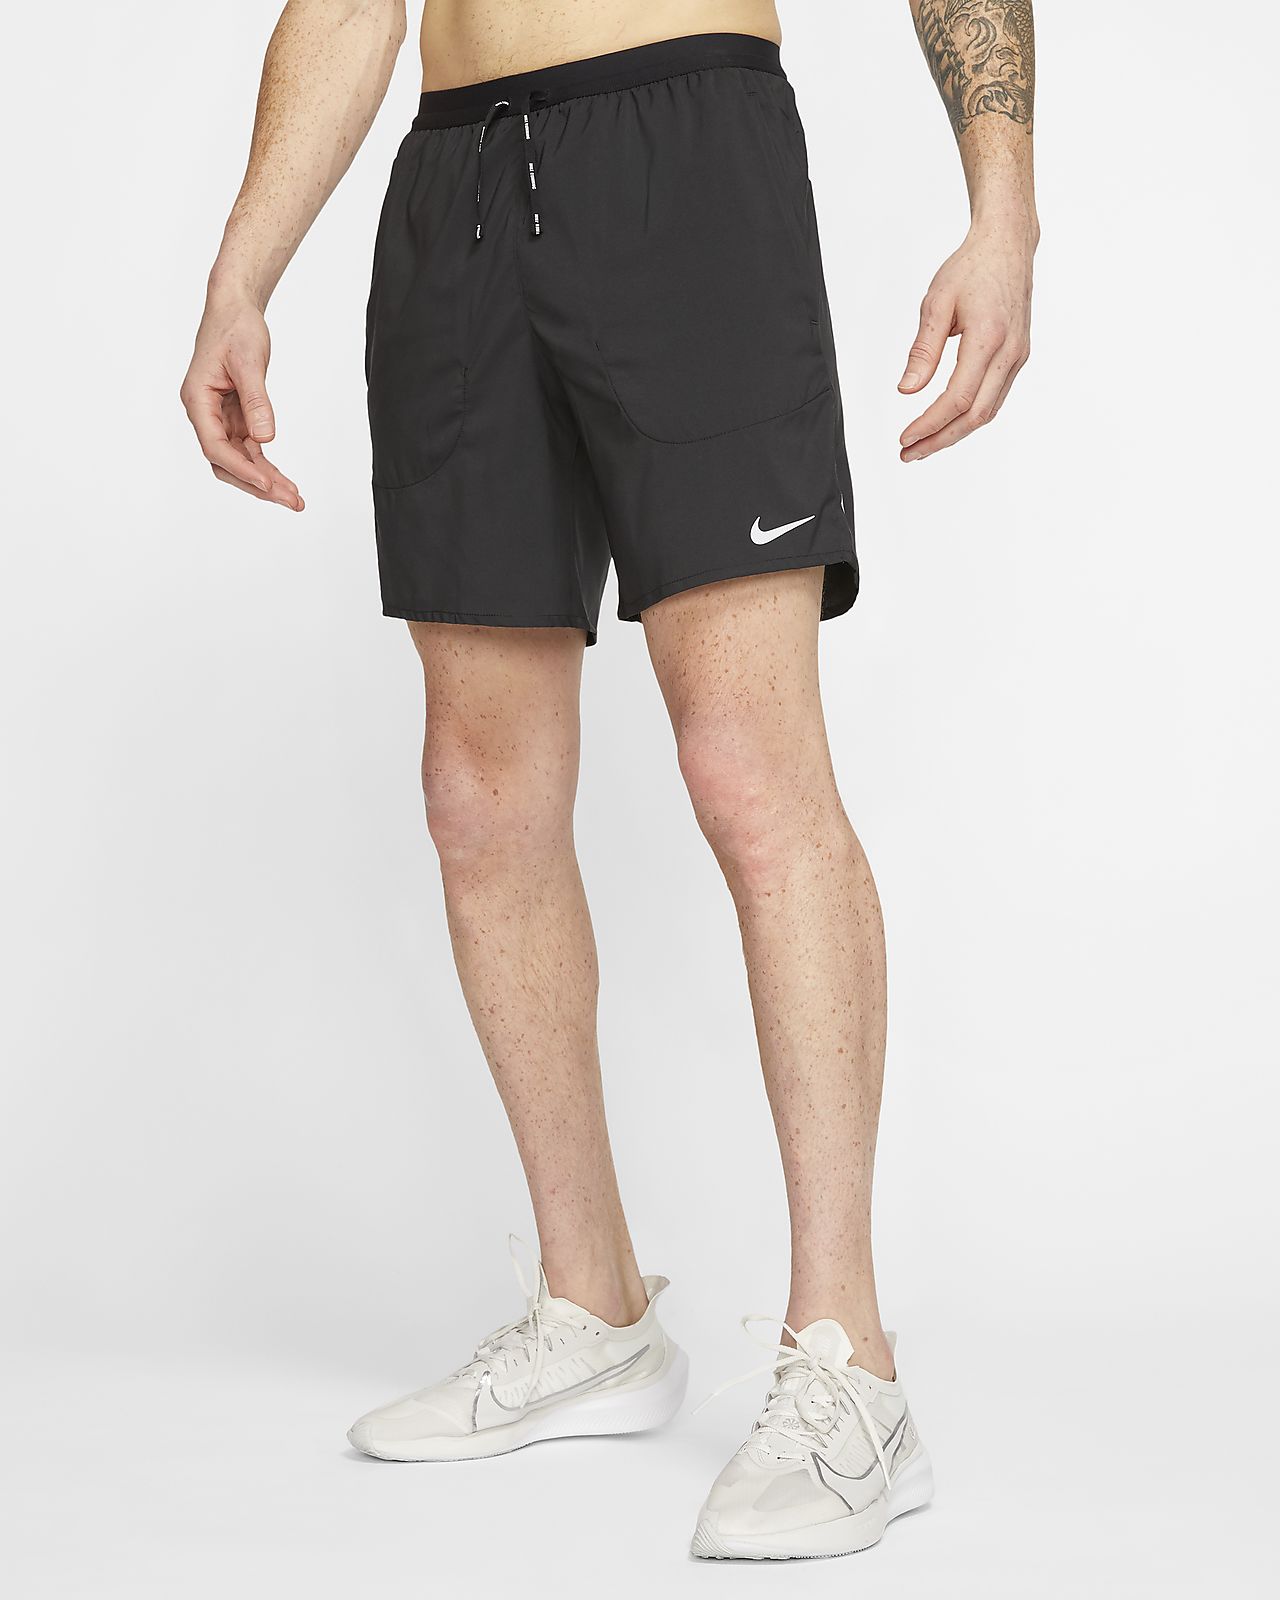 nike boys shorts sale